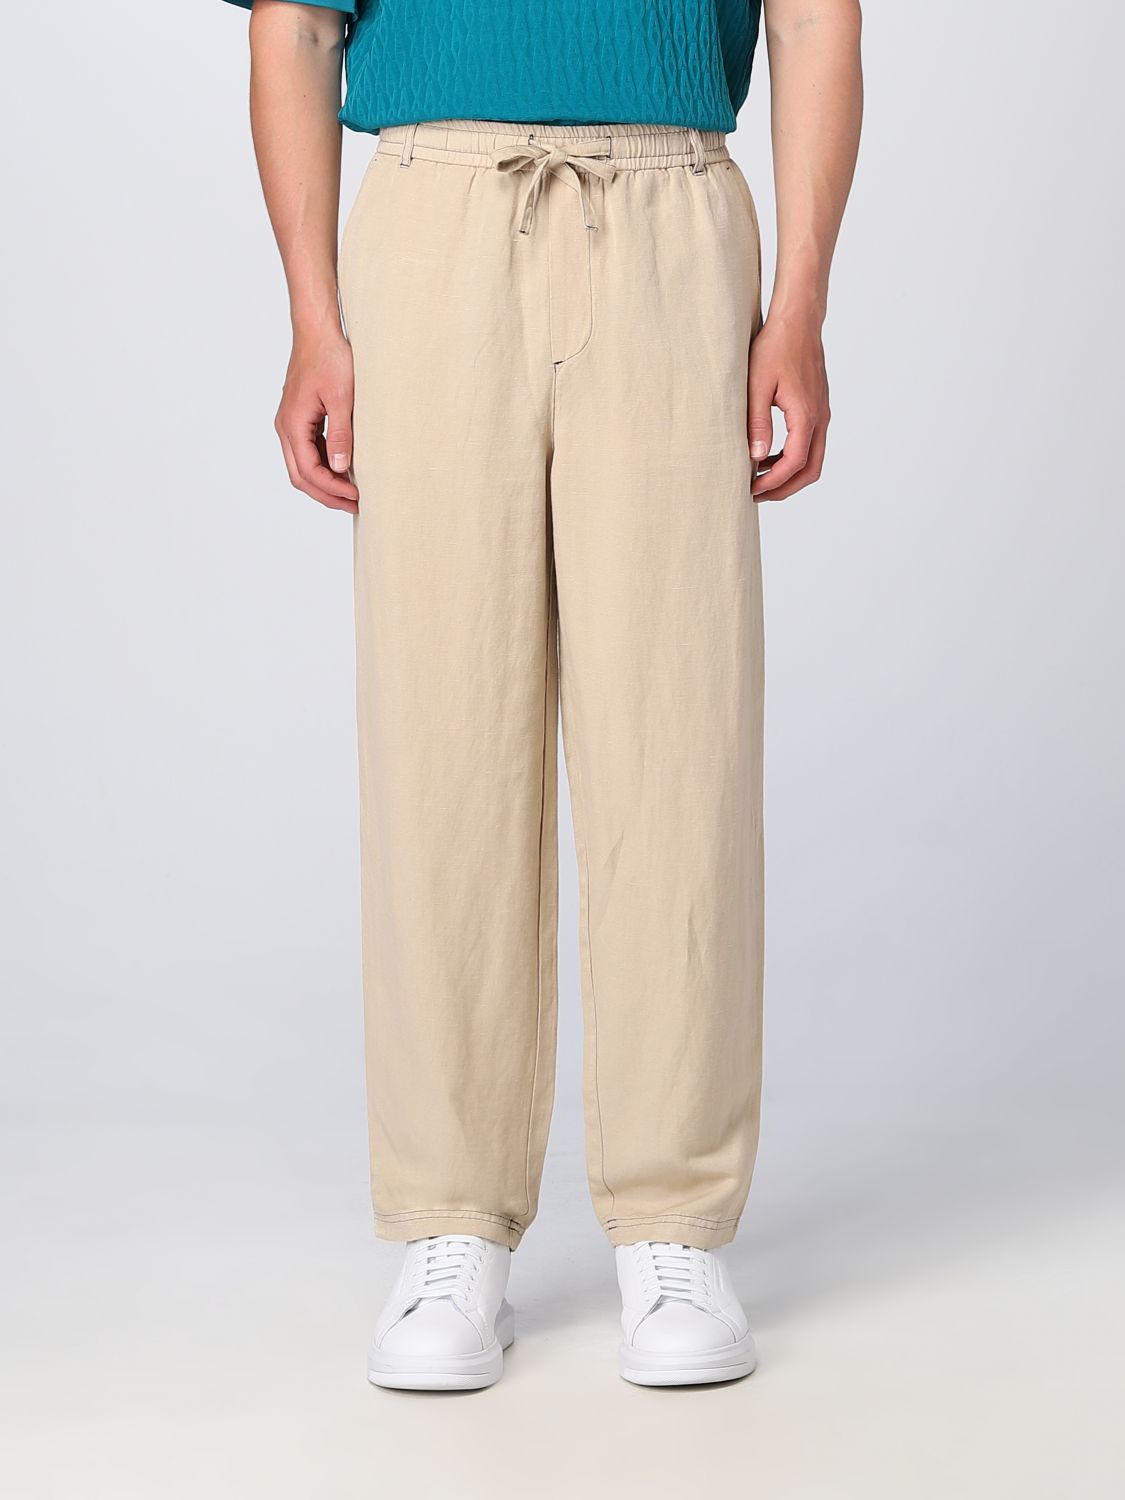 Regular fit stretch cotton twill pants | ARMANI EXCHANGE Man